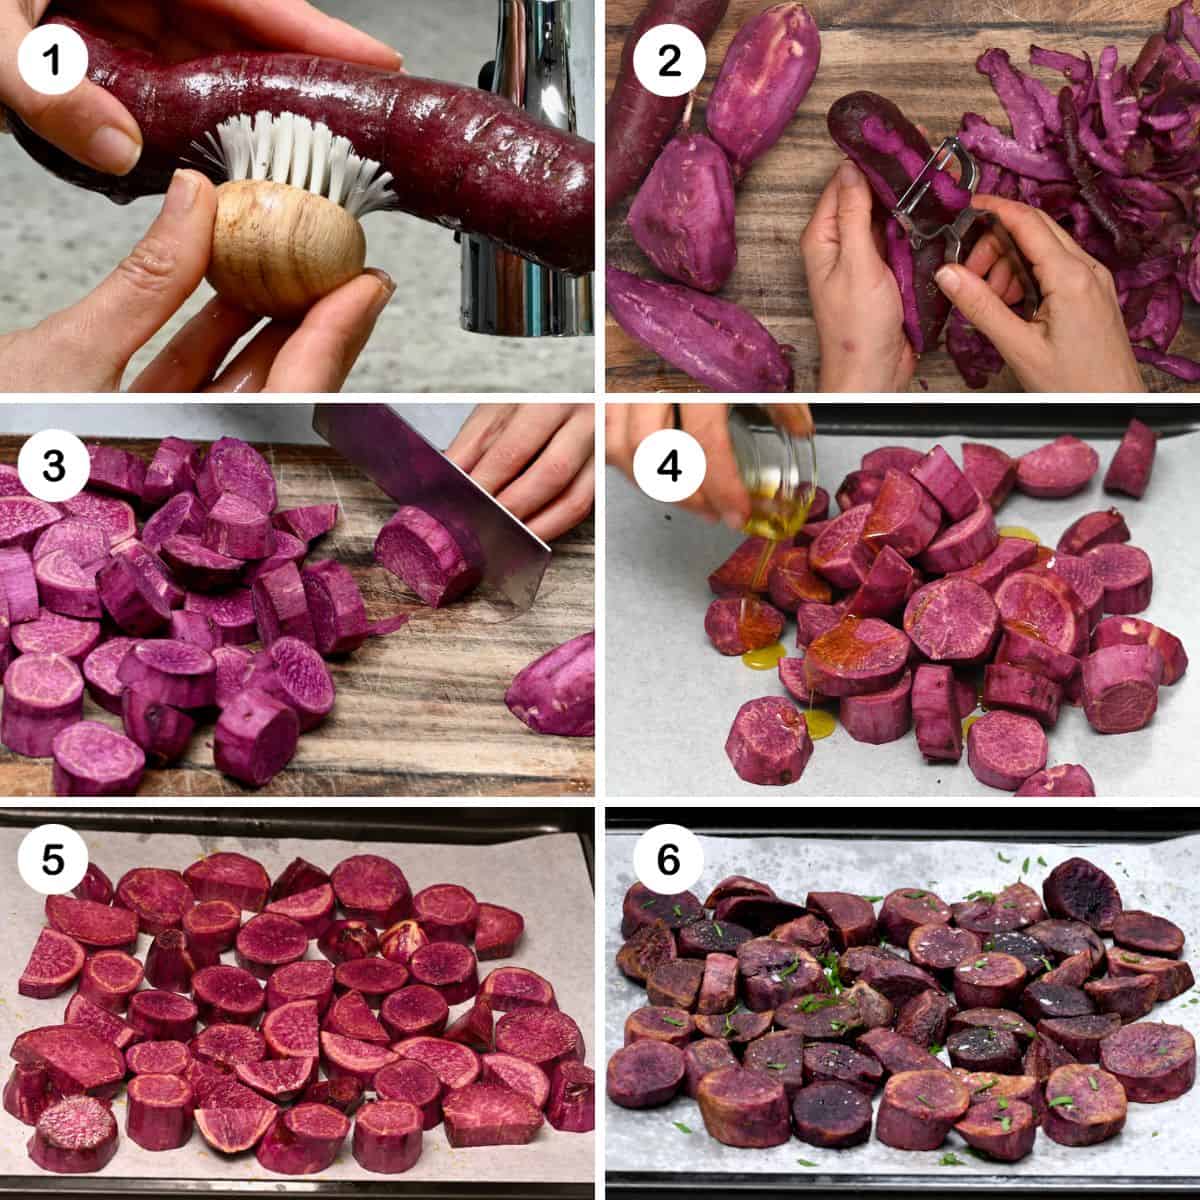 Steps for roasting Okinawan sweet potatoes